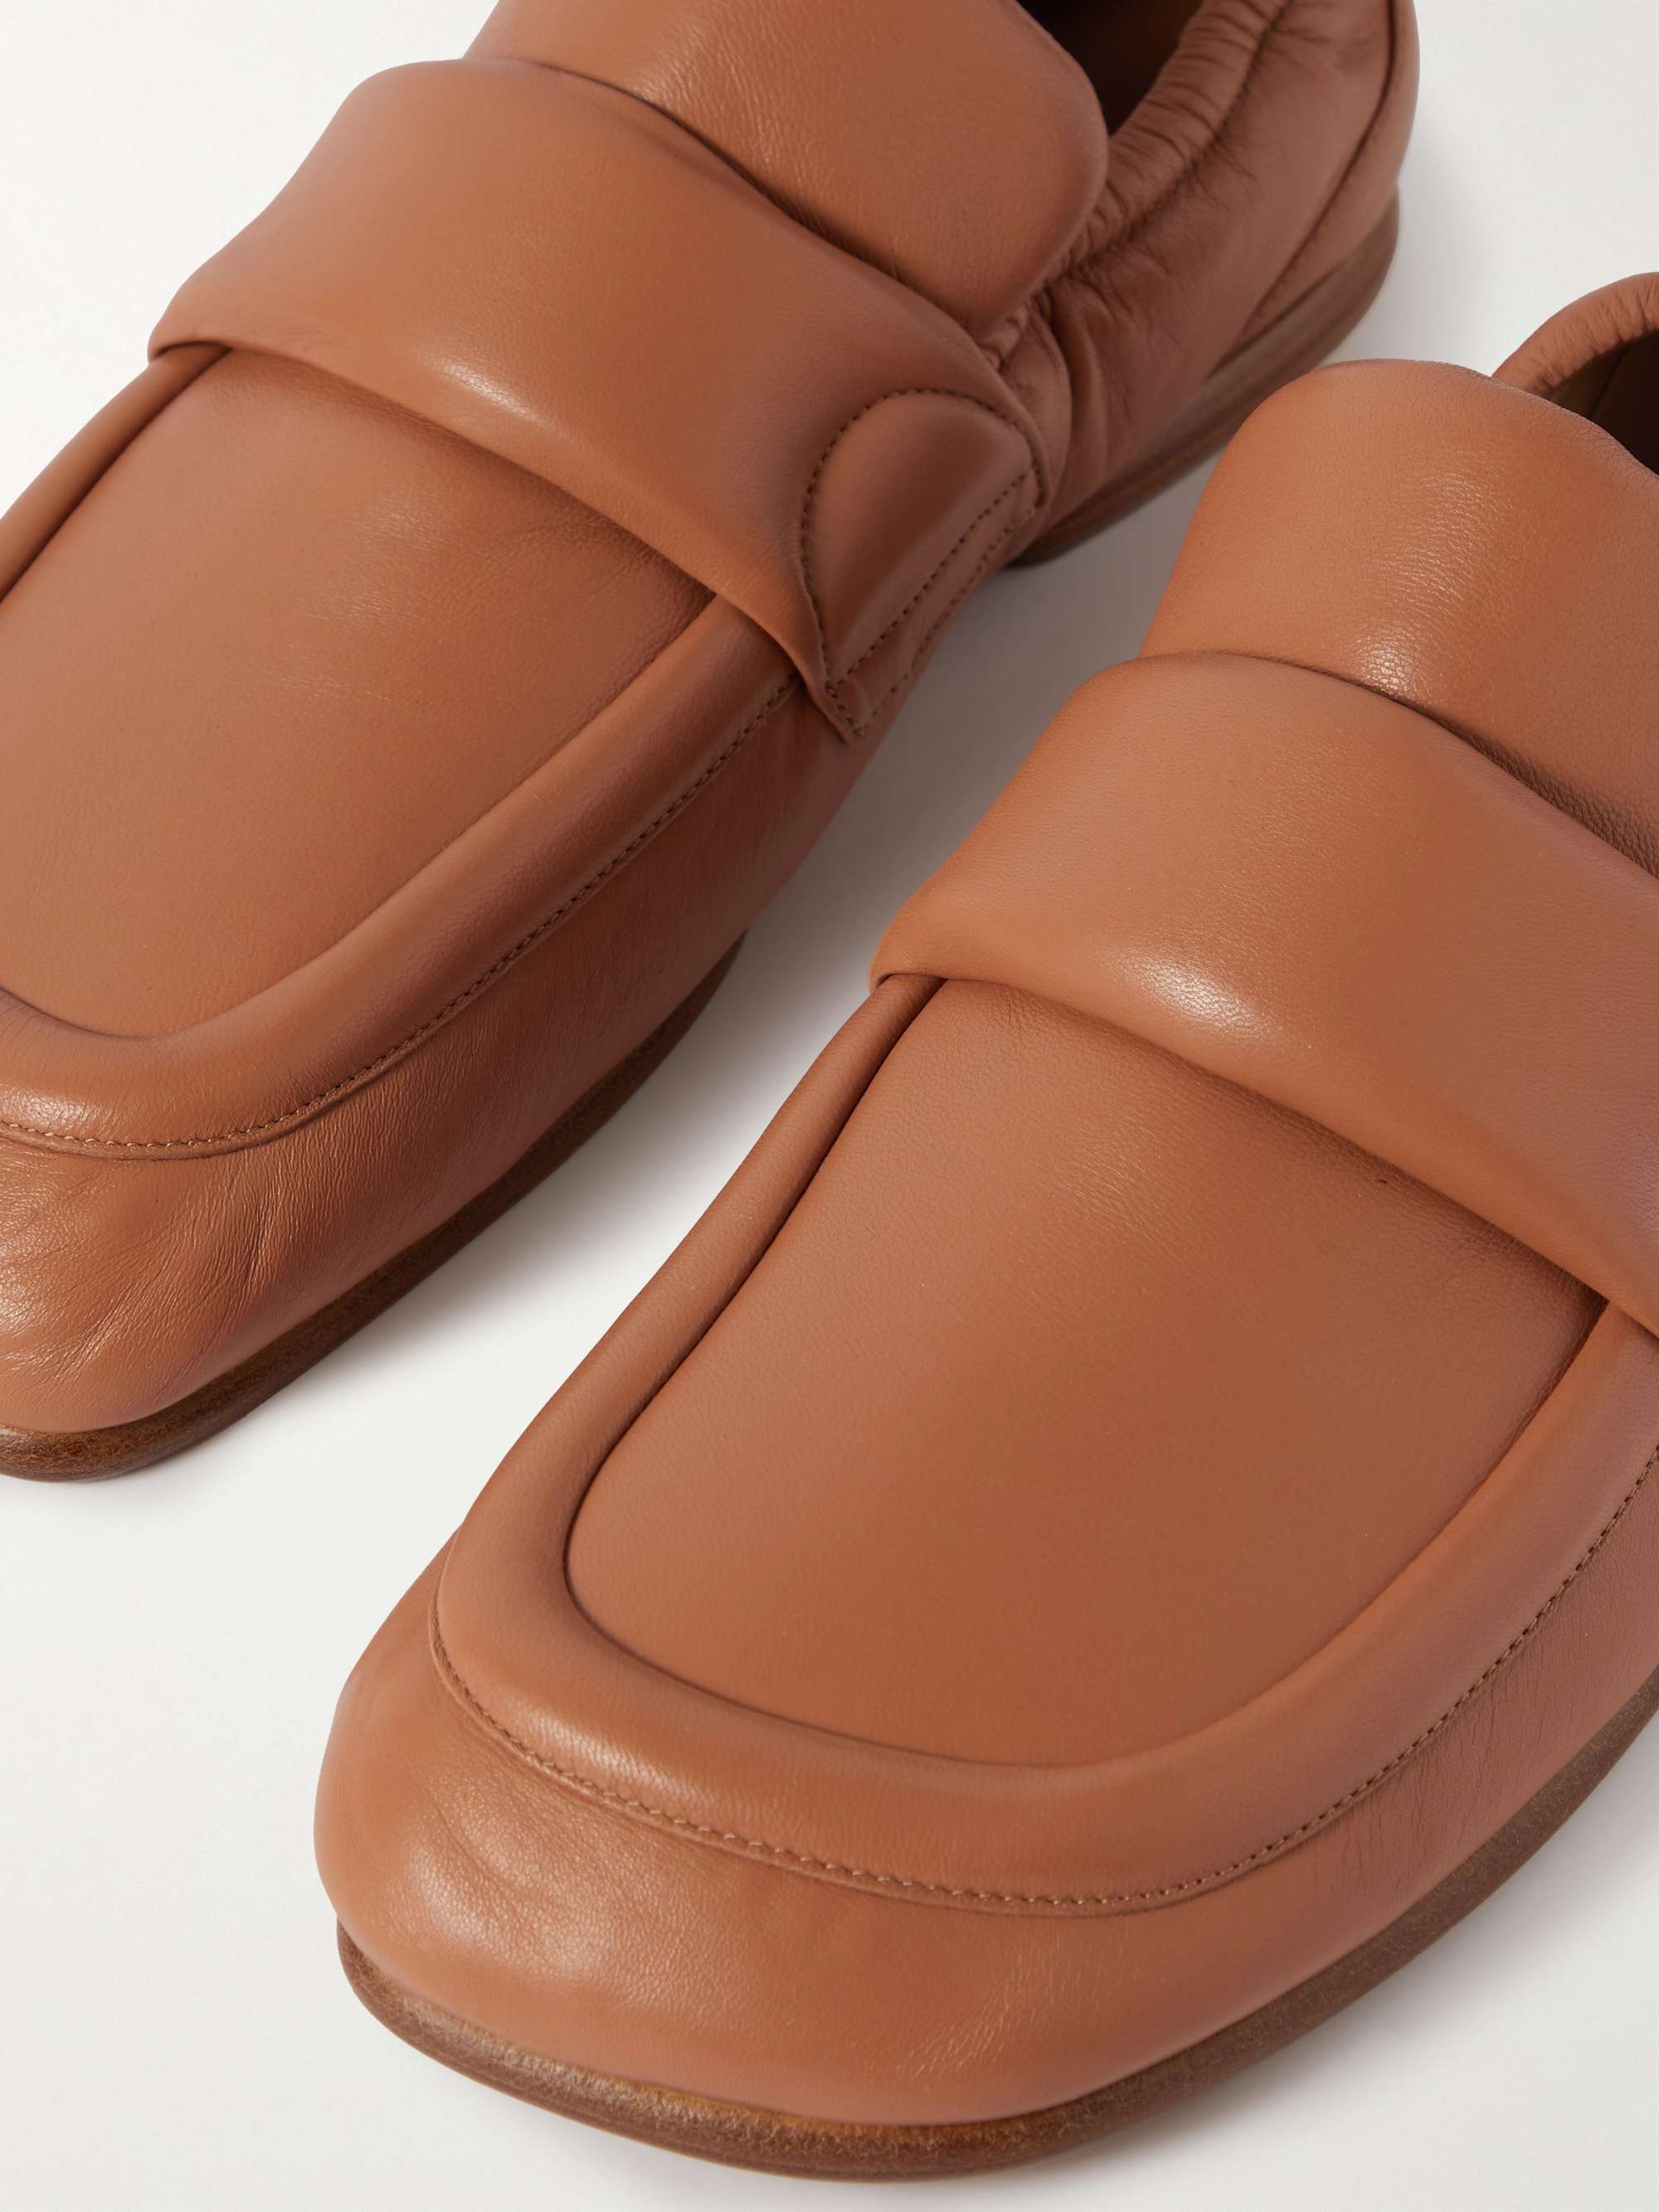 DRIES VAN NOTEN Leather Loafers for Men | MR PORTER